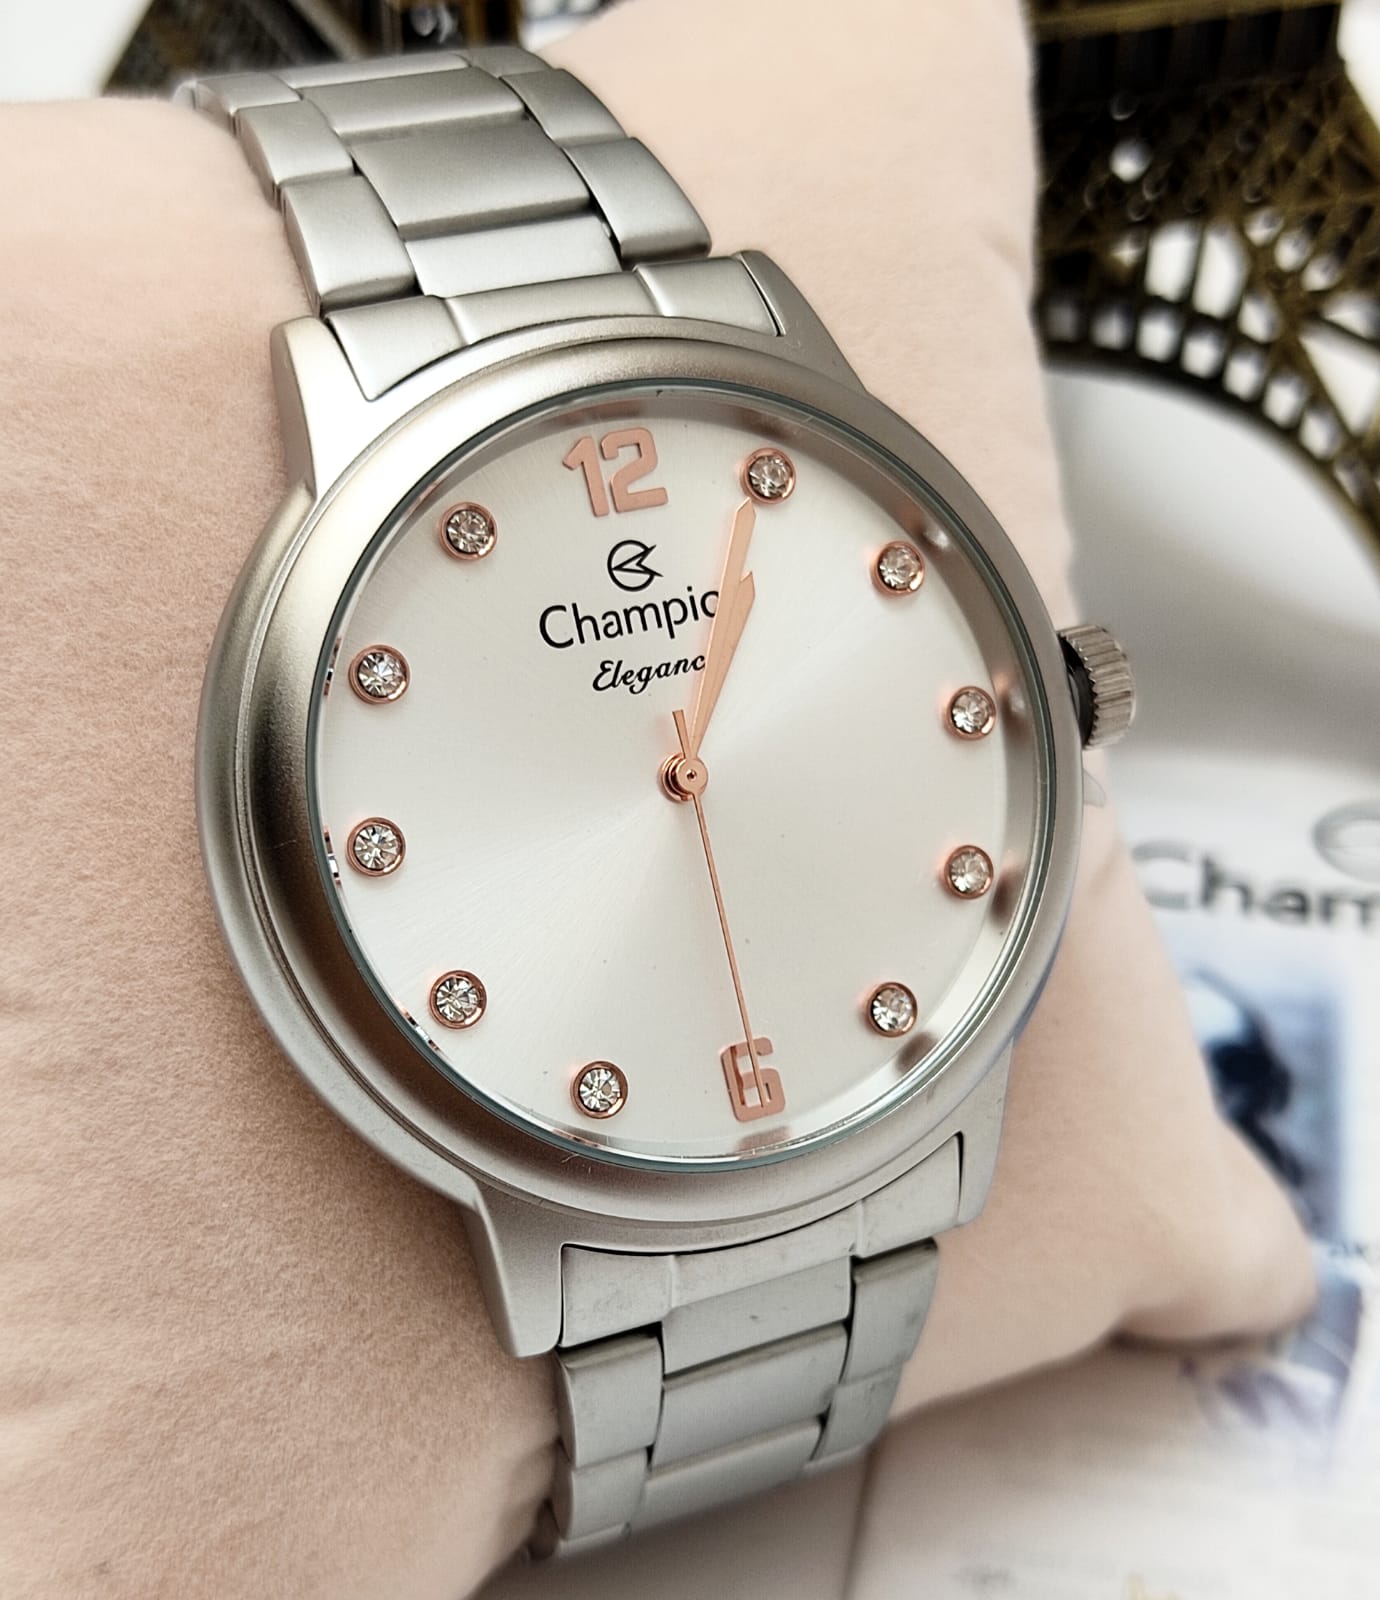 Relógio Champion Prata Feminino CN28437Q